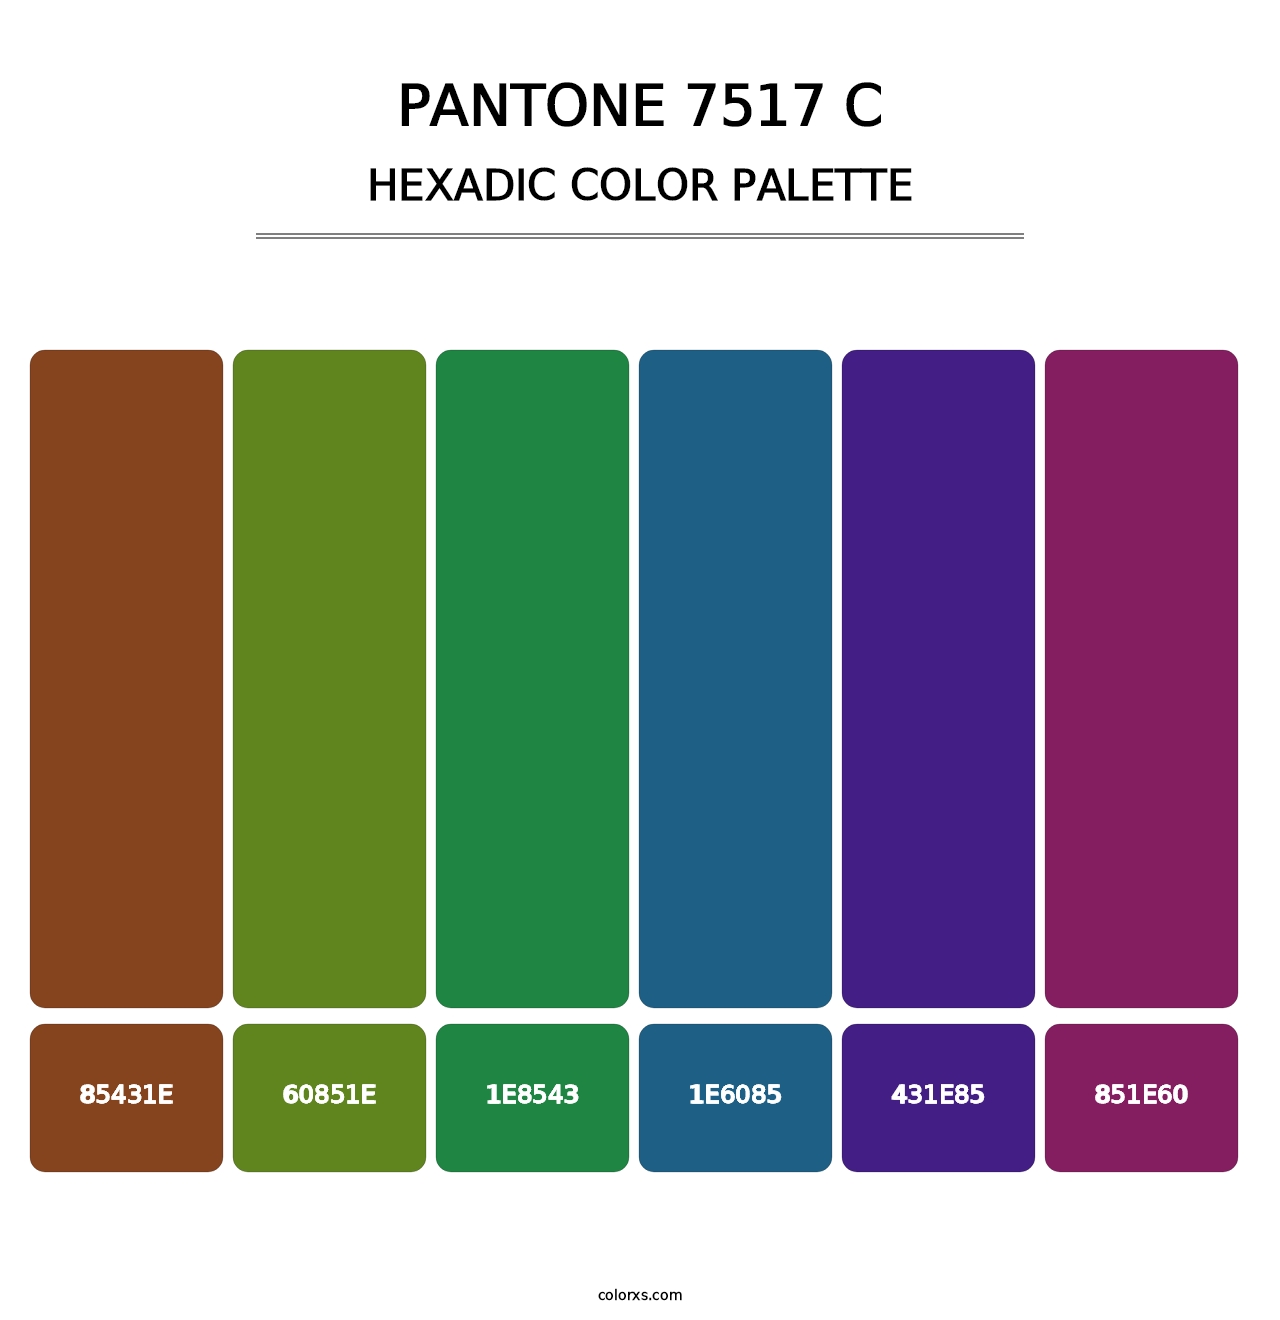 PANTONE 7517 C - Hexadic Color Palette